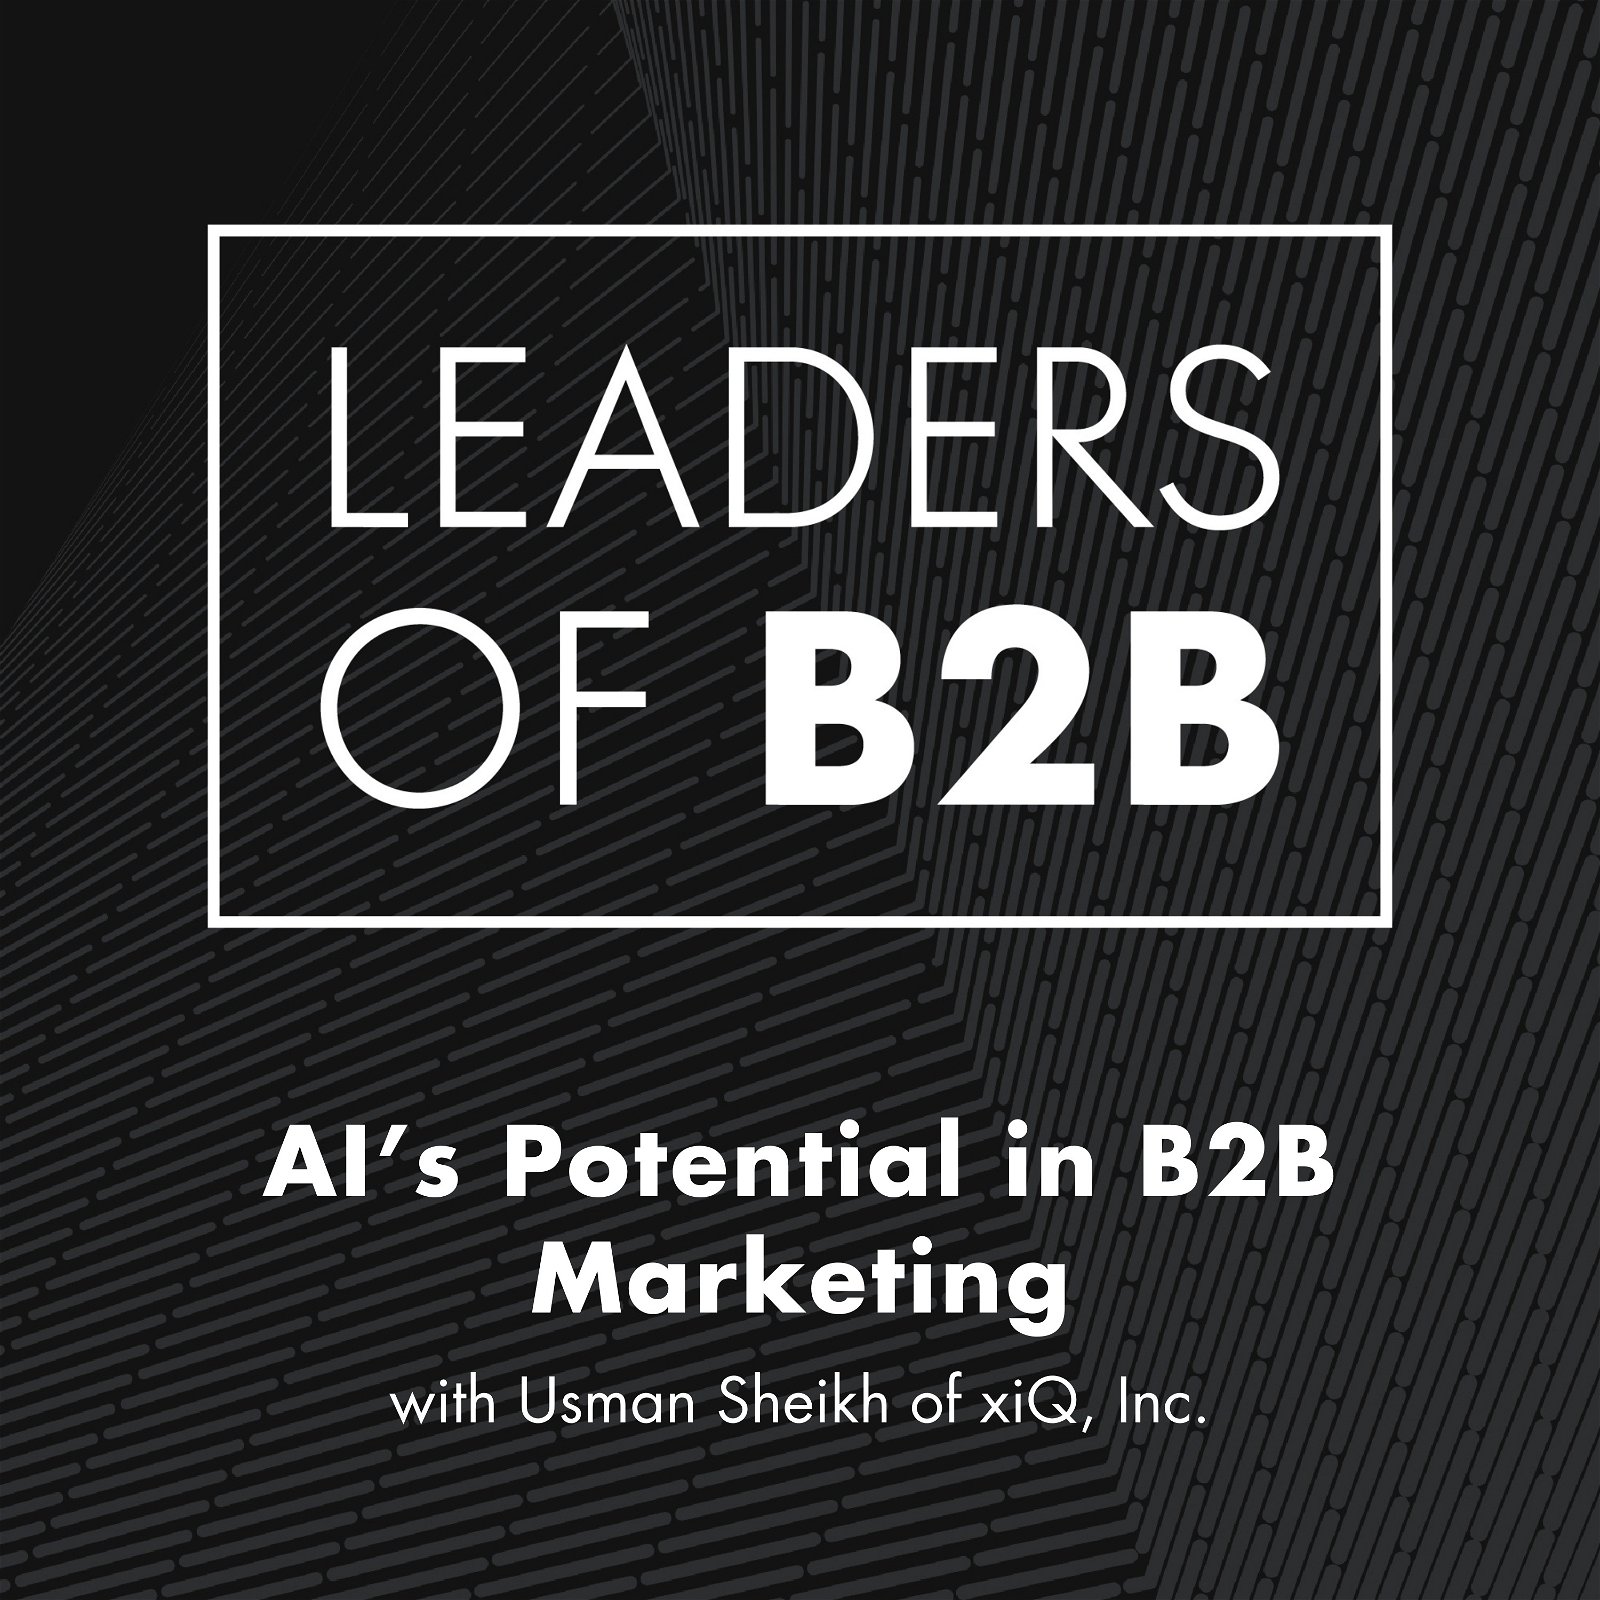 AI's Potential in B2B Marketing with Usman Sheikh of xiQ, Inc.